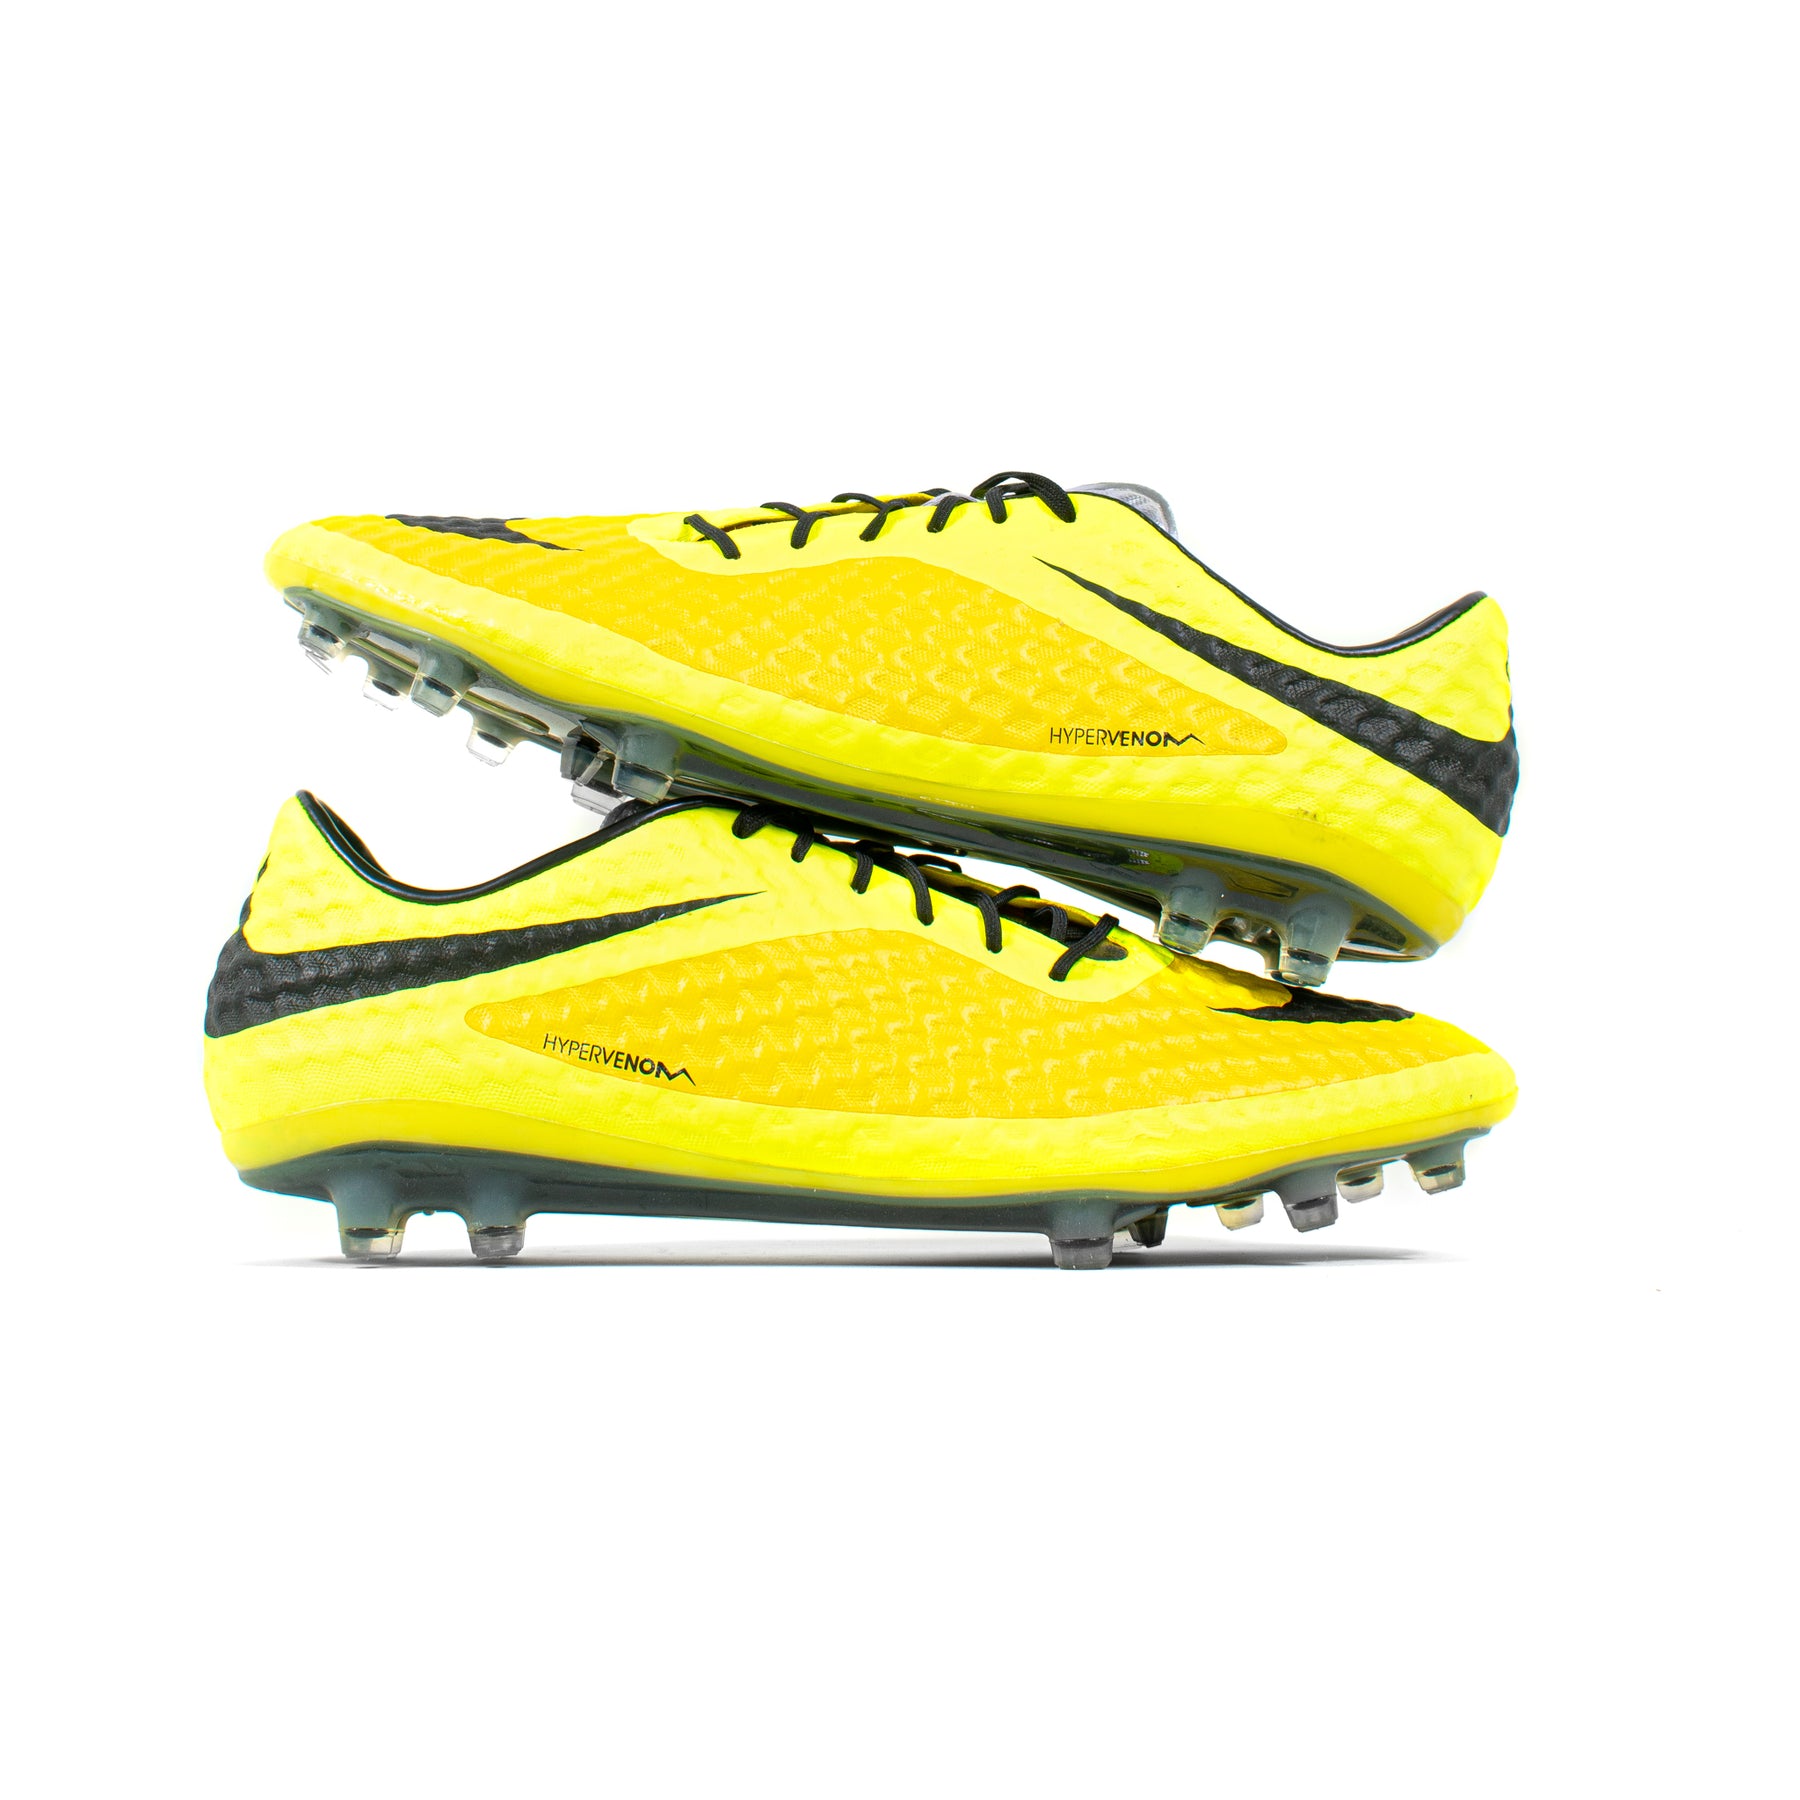 Knipperen Buurt Fauteuil Nike Hypervenom I Original Yellow FG – Classic Soccer Cleats